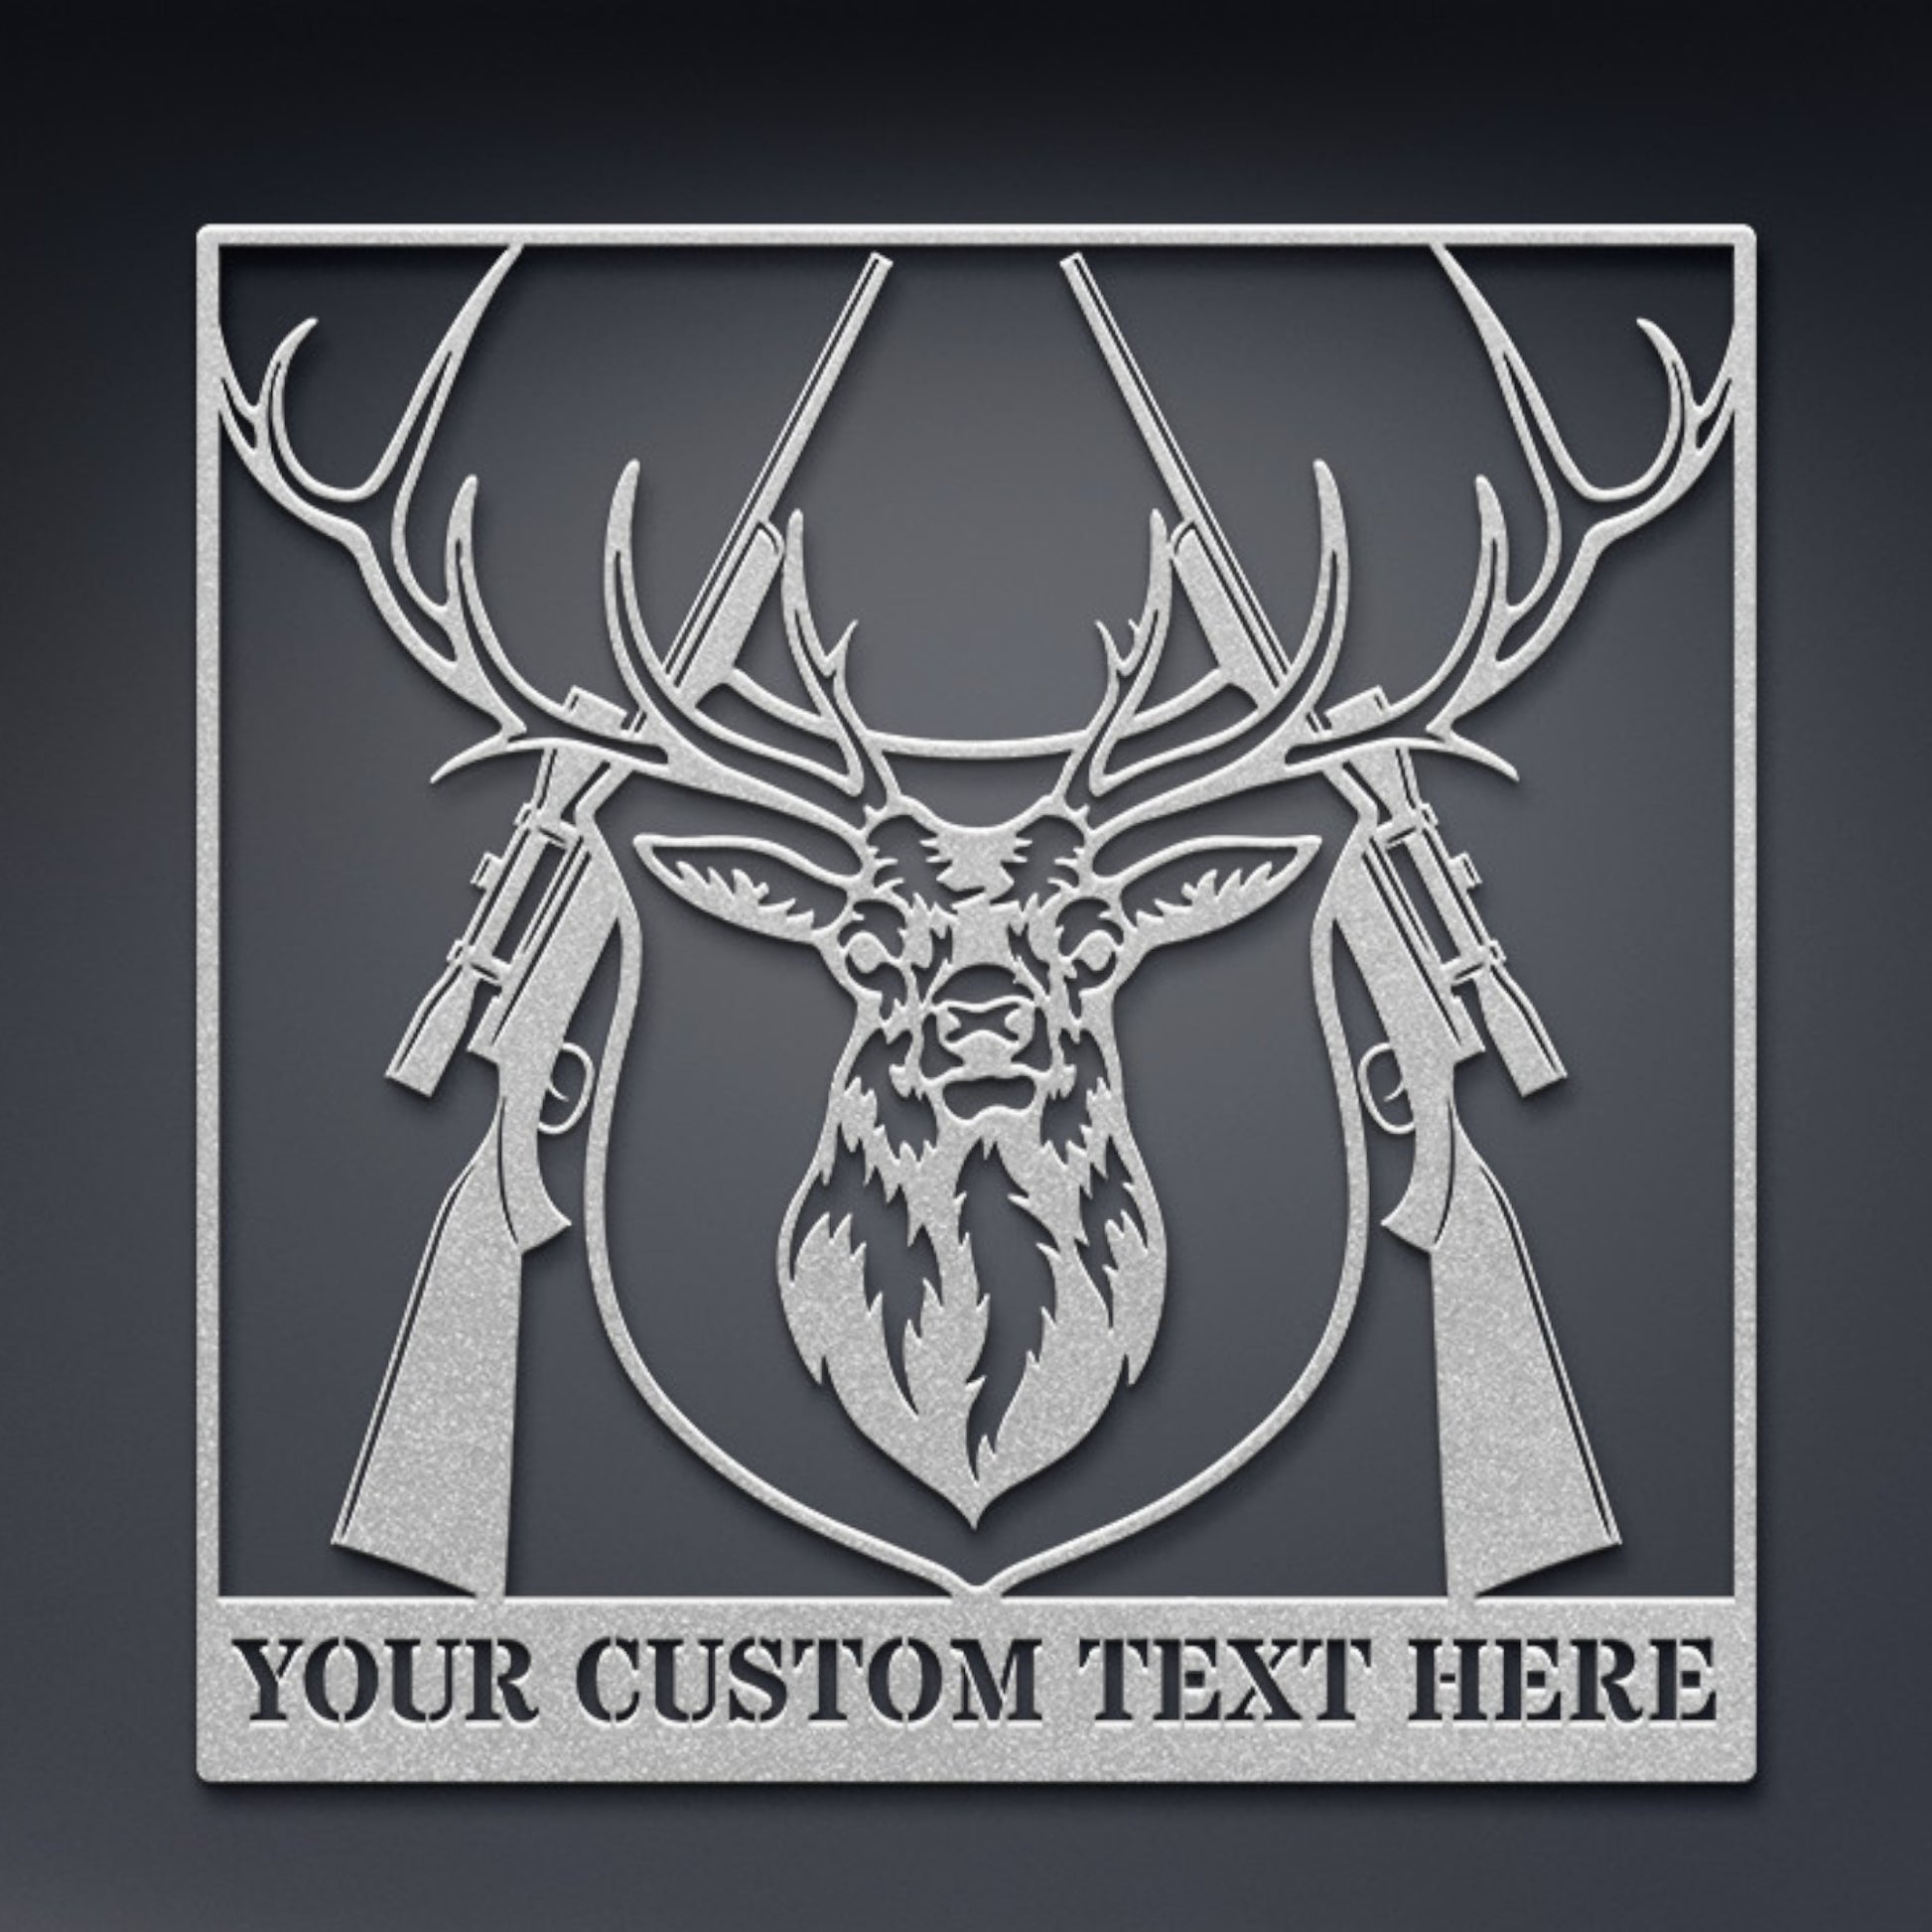 Personalized Deer Head Plaque Name Metal Sign. Customizable Deer Hunter Wall Decor Gift. Hunting Trophy Steel Sign. Deer Head Portrait Gift